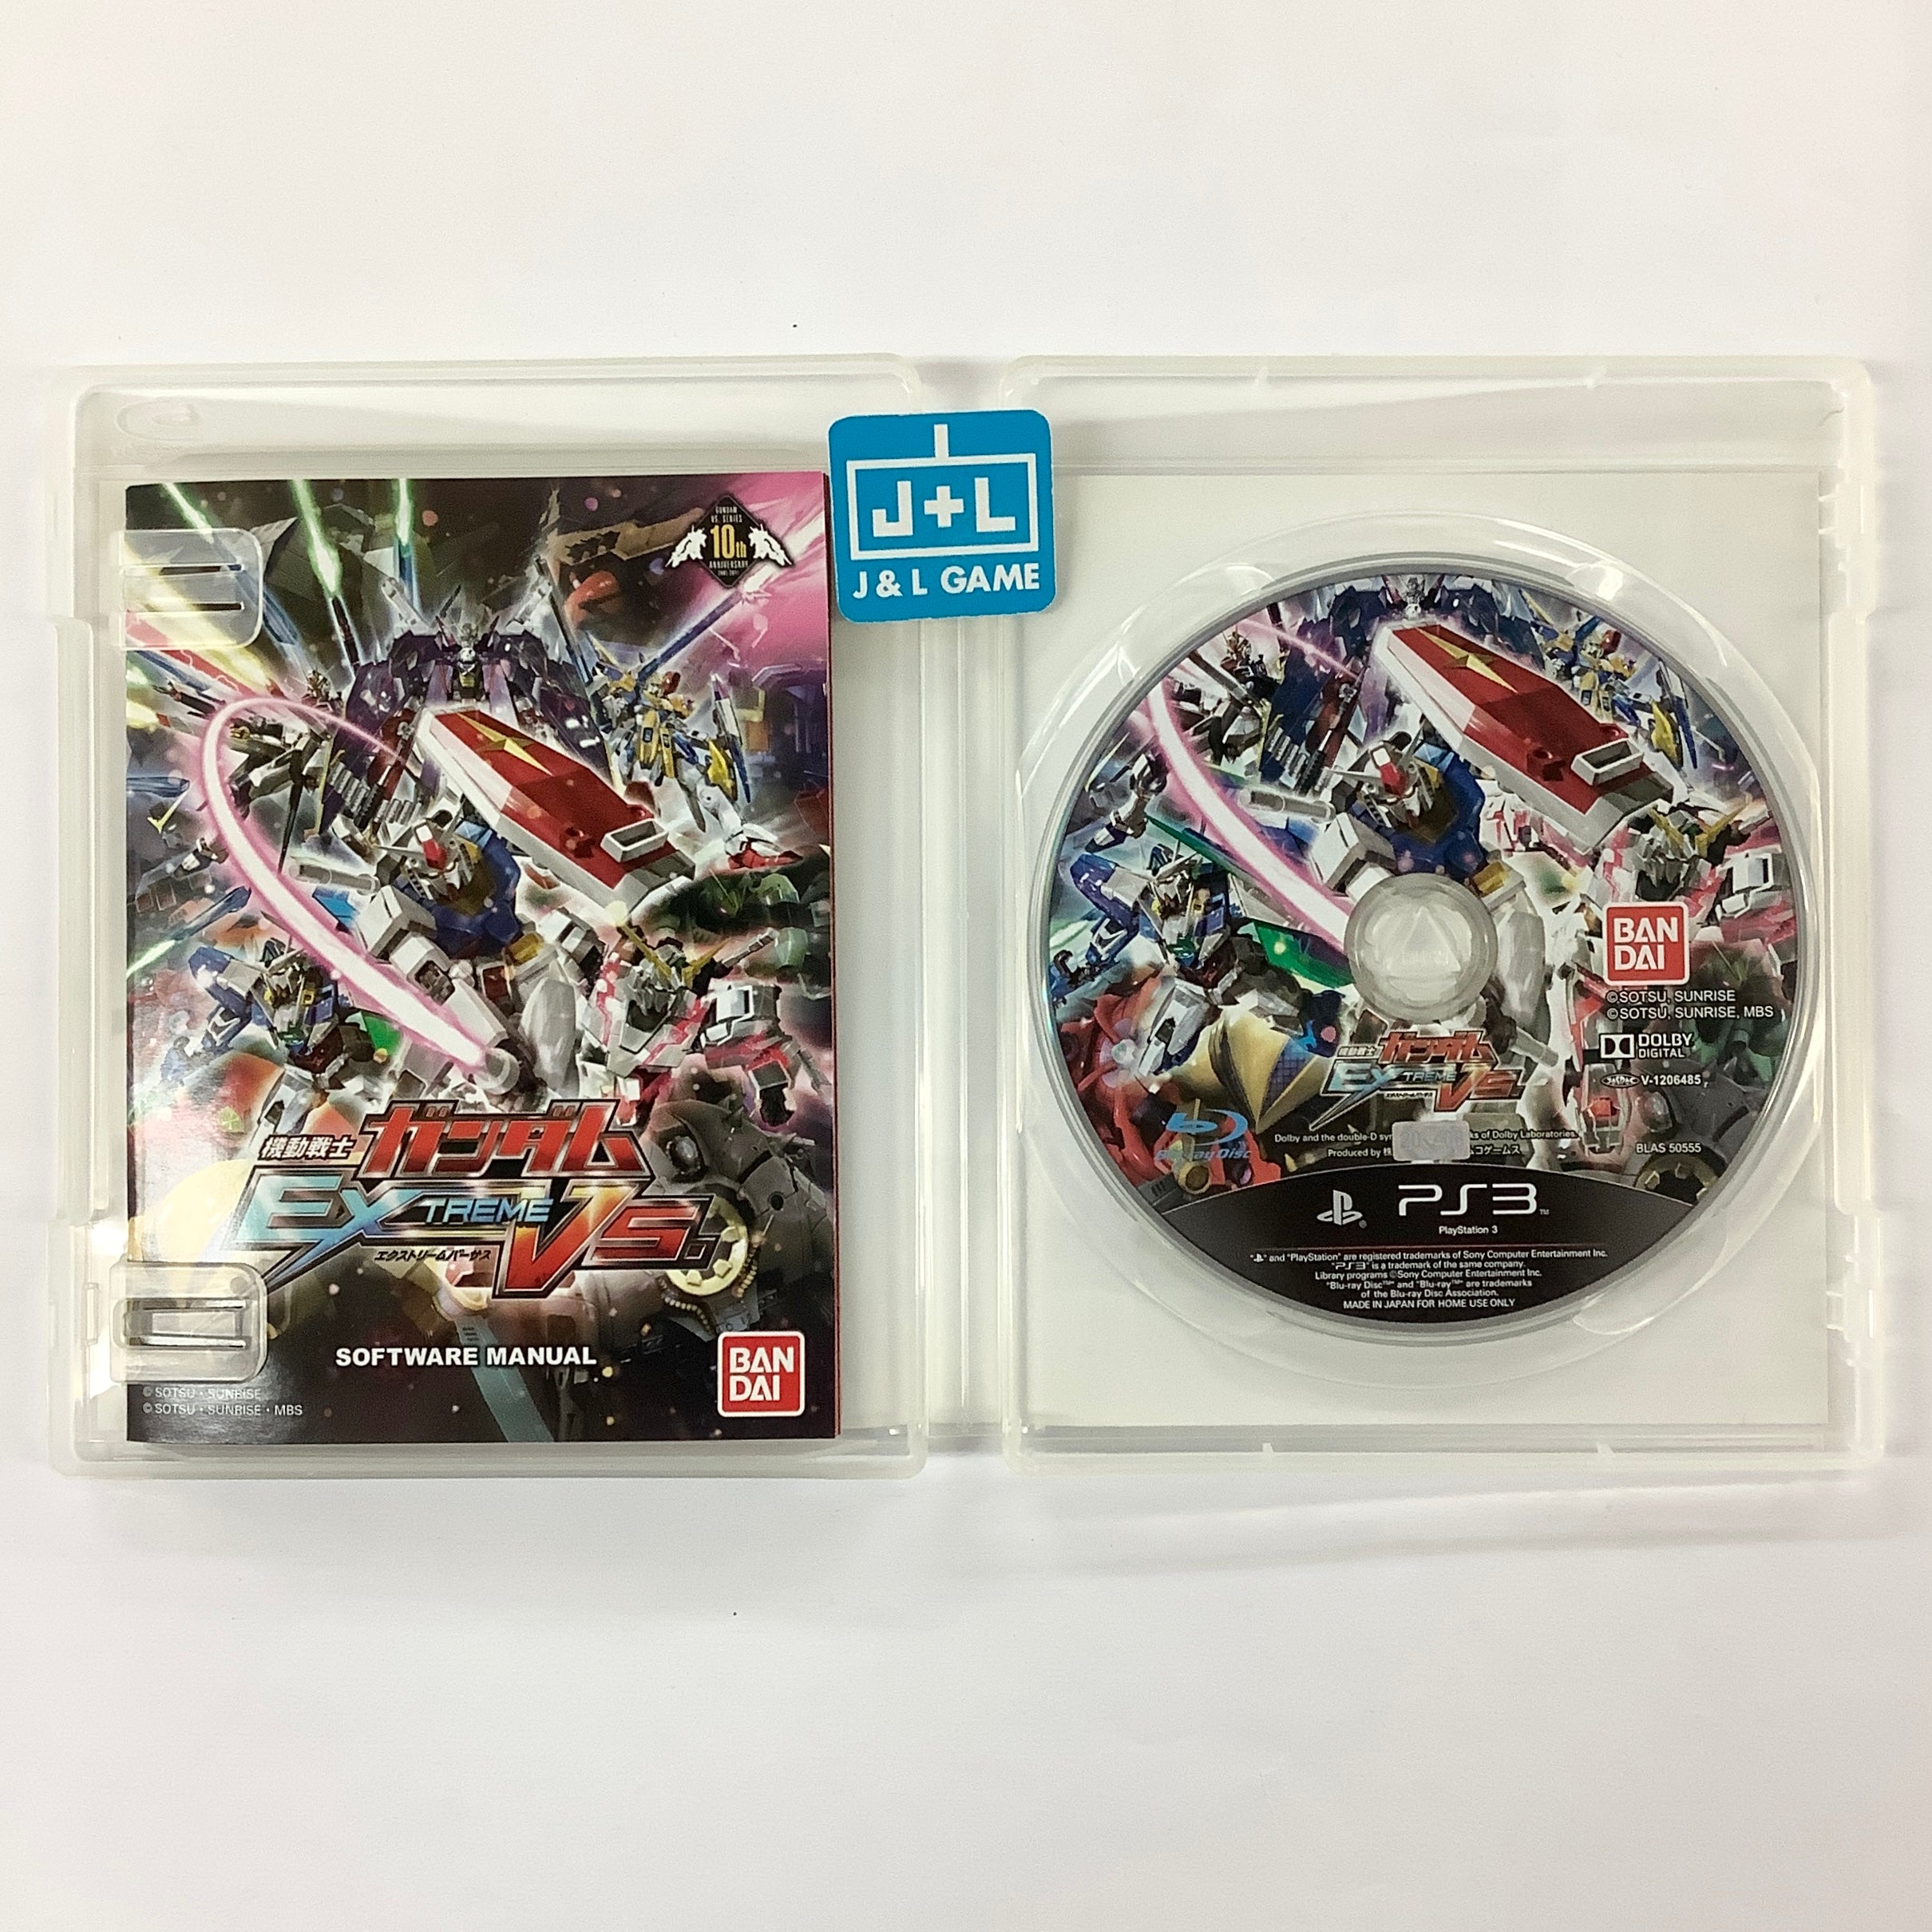 Kidou Senshi Gundam: Extreme VS (PlayStation 3 the Best) - (PS3) PlayStation 3 [Pre-Owned] (Asia Import) Video Games Bandai Namco Games   